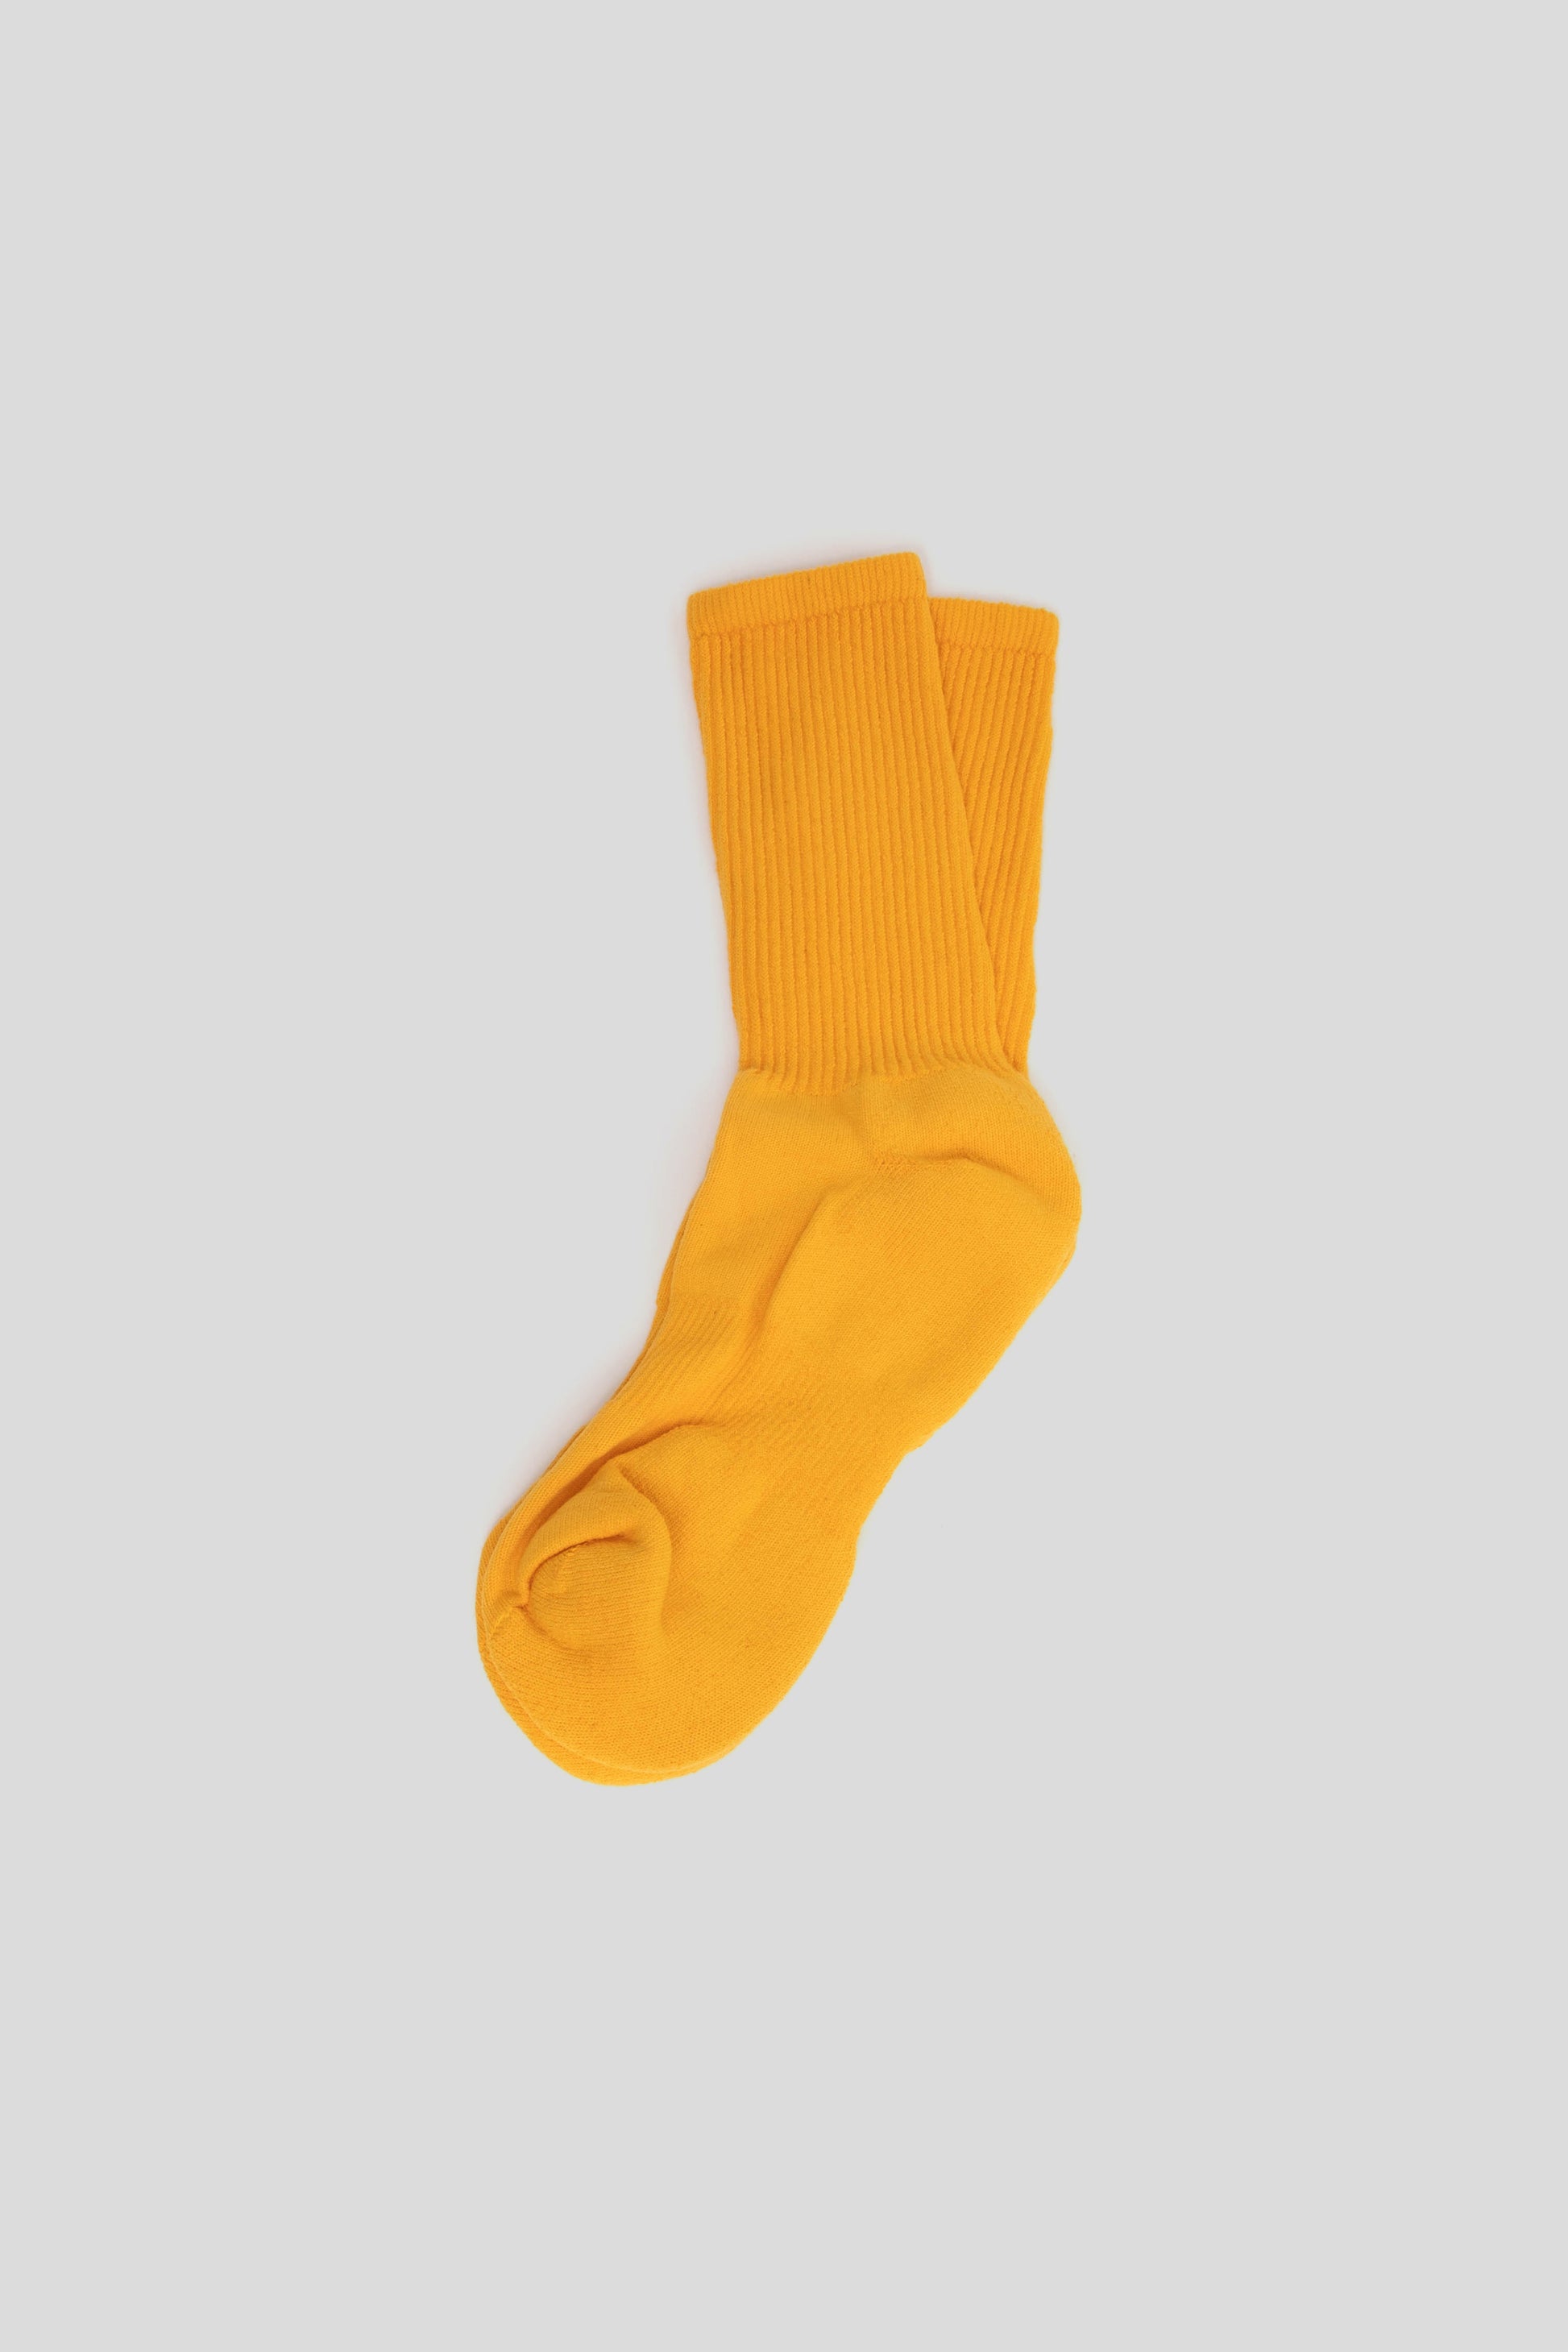 American Trench Mil-Spec Sport Socks in Yellow